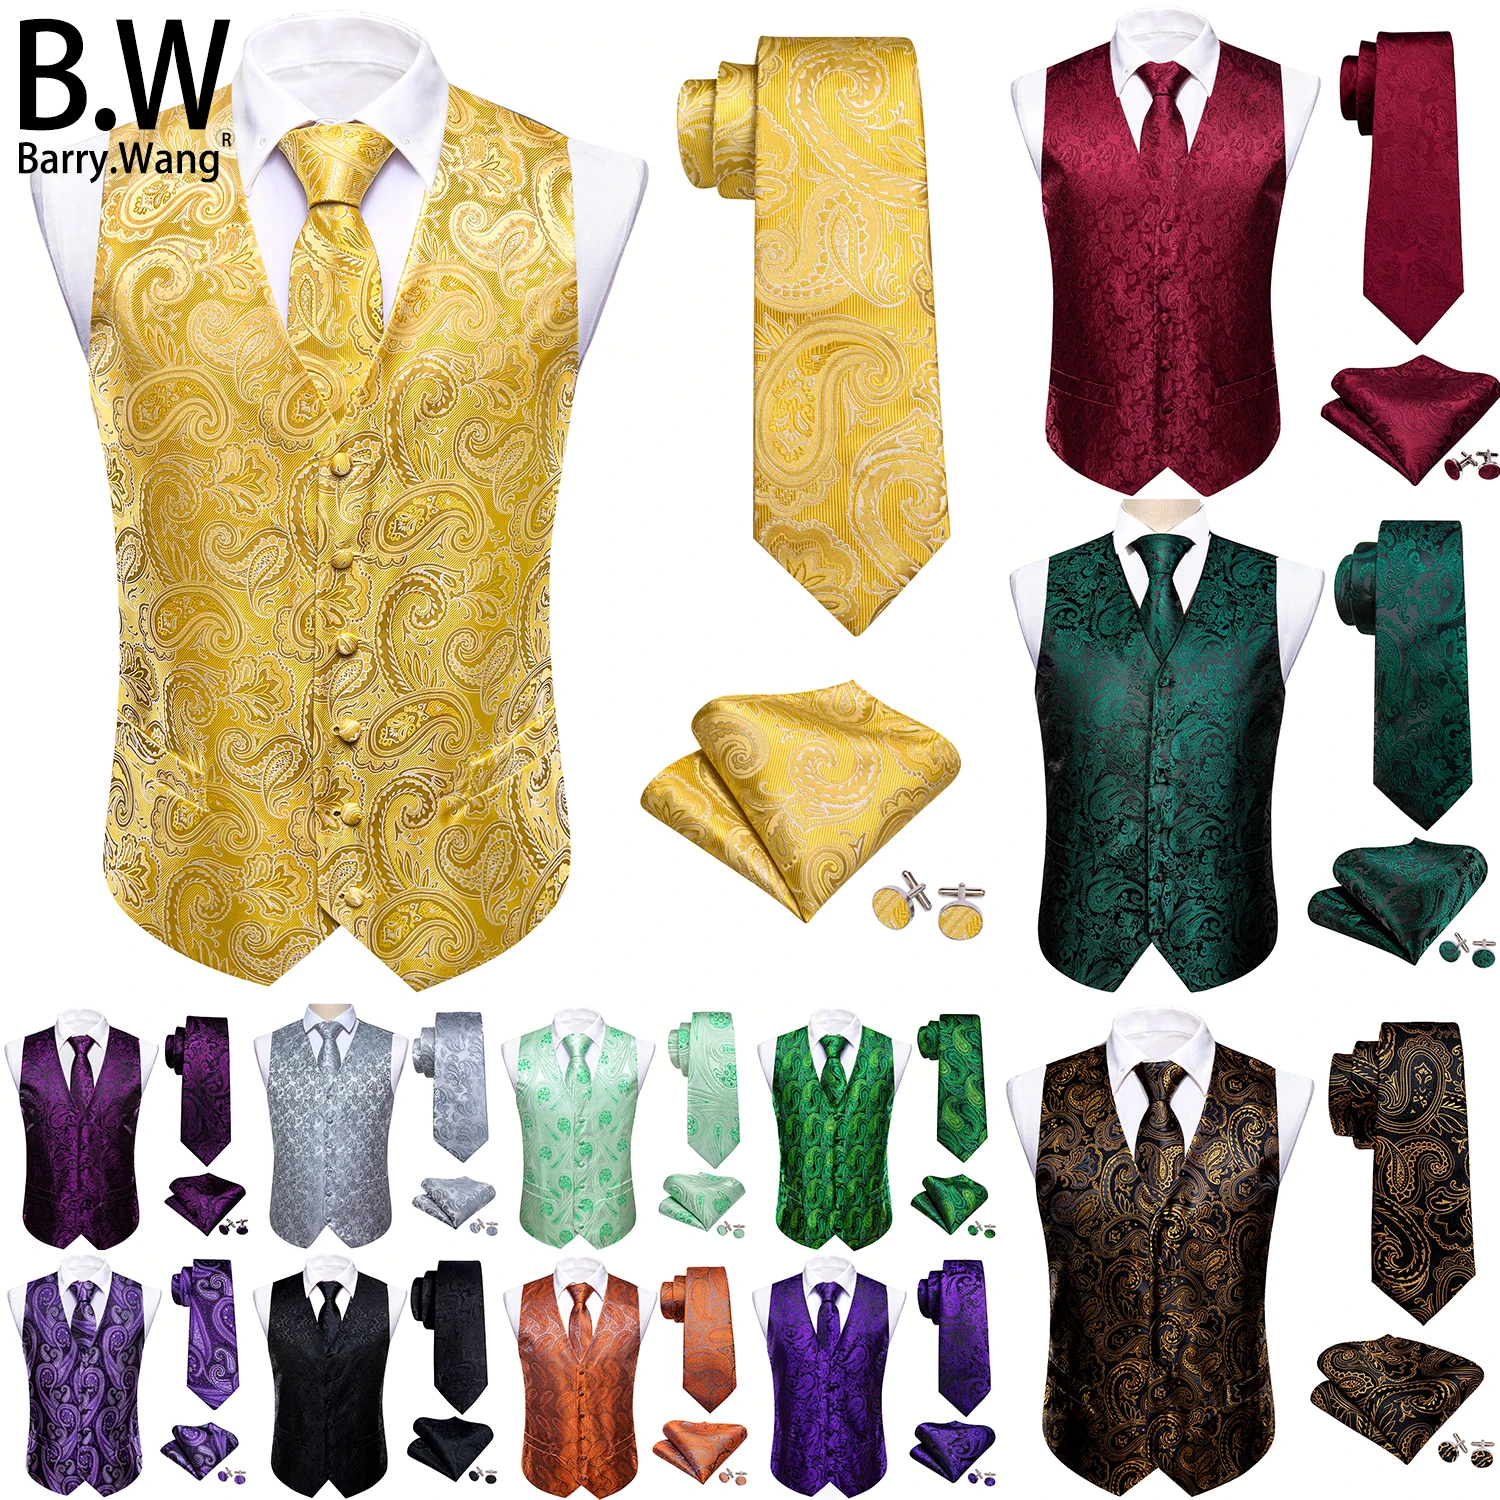 

Barry.Wang Silk Men Vest Tie Hanky Cufflinks Set 100 Colors Jacquard Paisley Floral Waistcoat Sleeveless Jacket Wedding Business